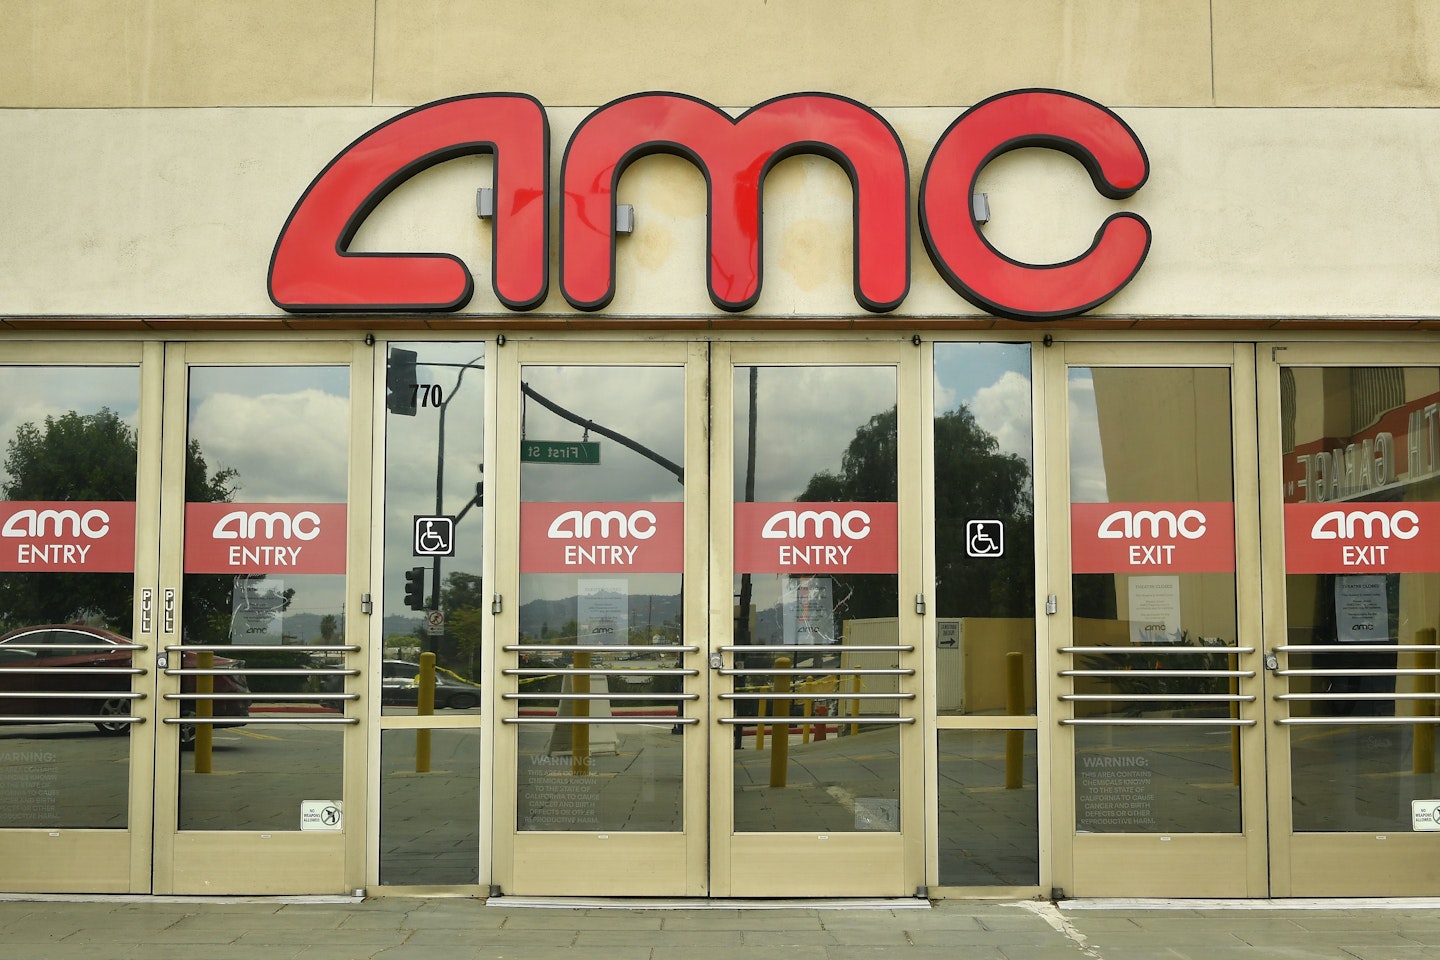 AMC Cinema